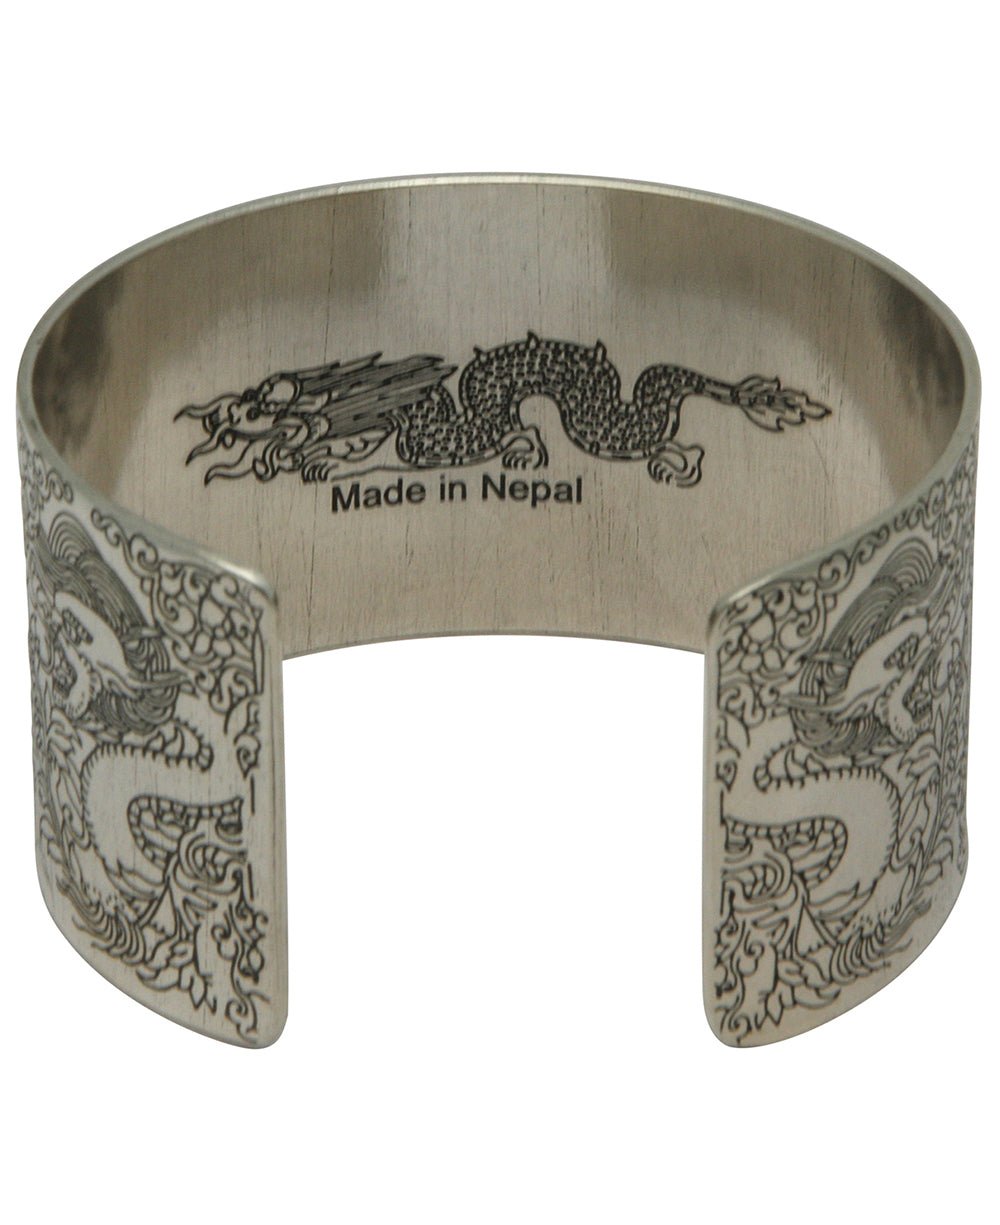 Engraved Buddhas and Dragon Cuff Bracelet, Nepal - Bracelets